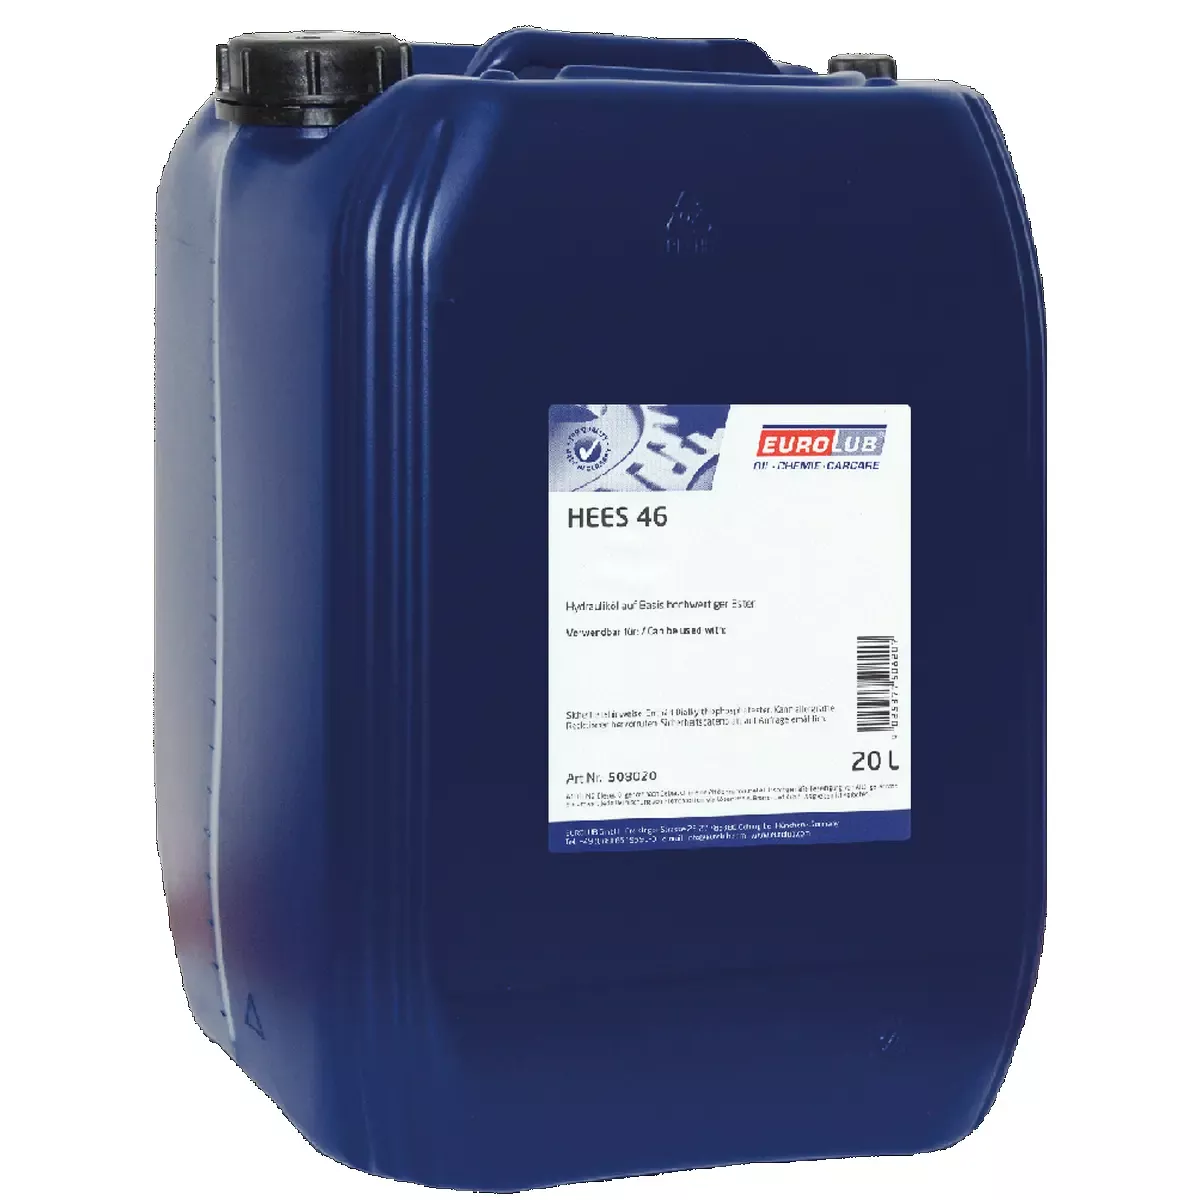 Betriebsmittel HEES 46 biologisch abbaubares Hydrauliköl, 20 l Kanister für Betriebsbedarf